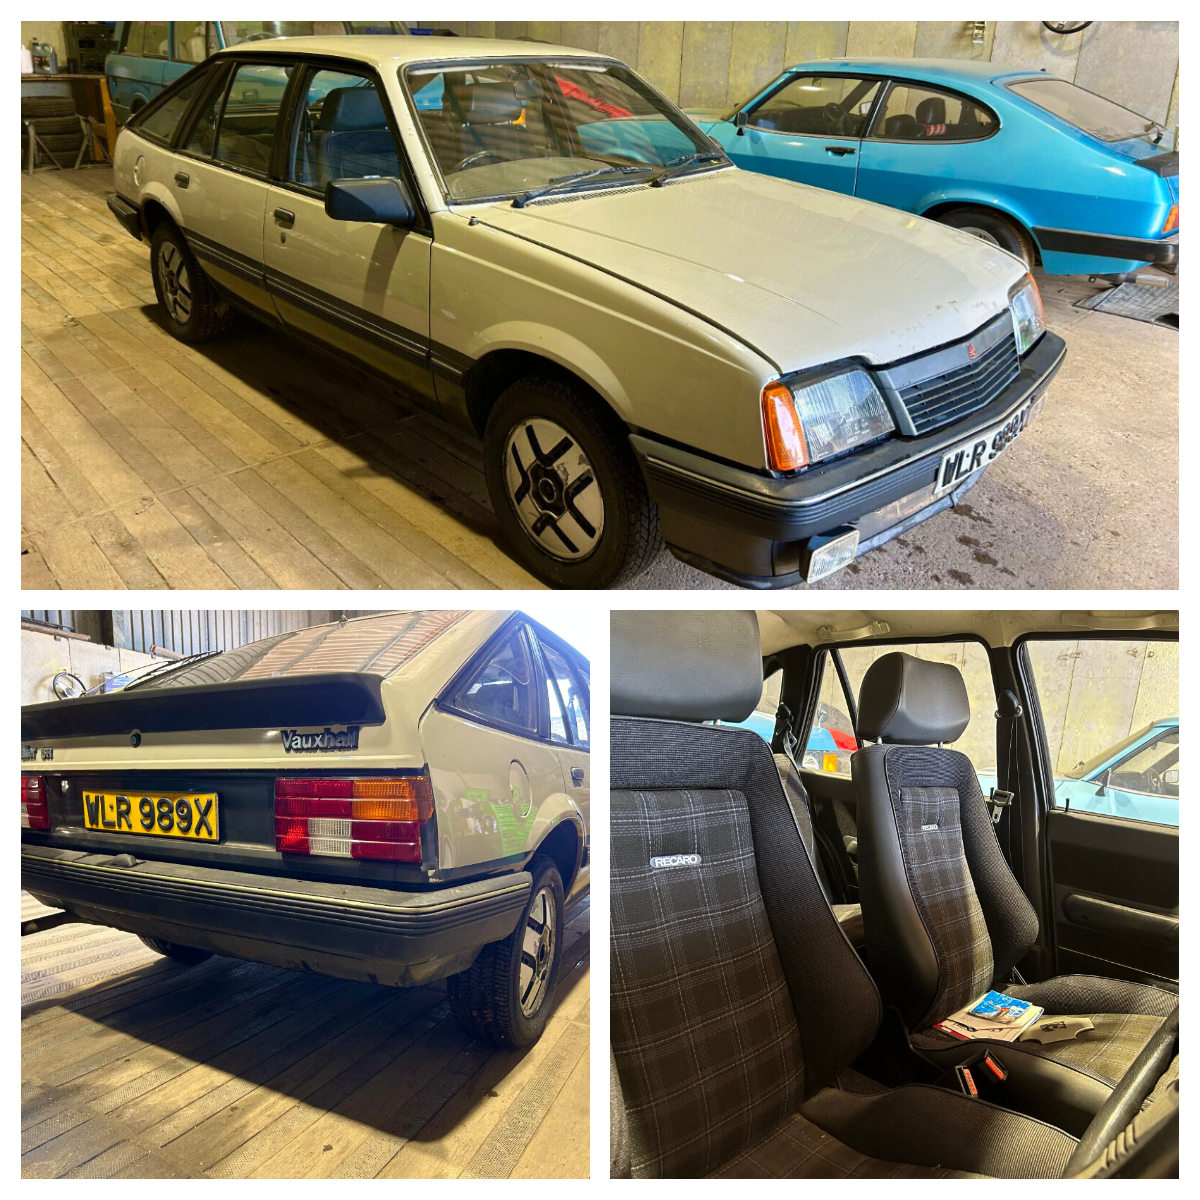 1982 Vauxhall Cavalier SR - 1 Previous Keeper
More info --> ow.ly/LQx850PLT4u

#barnfind #garagefind #ukbarnfinds #retrocar  #VauxhallCavalierSR #ClassicCar #UKCar #CarEnthusiast #OldCar #CarCollectors #VauxhallCavalier